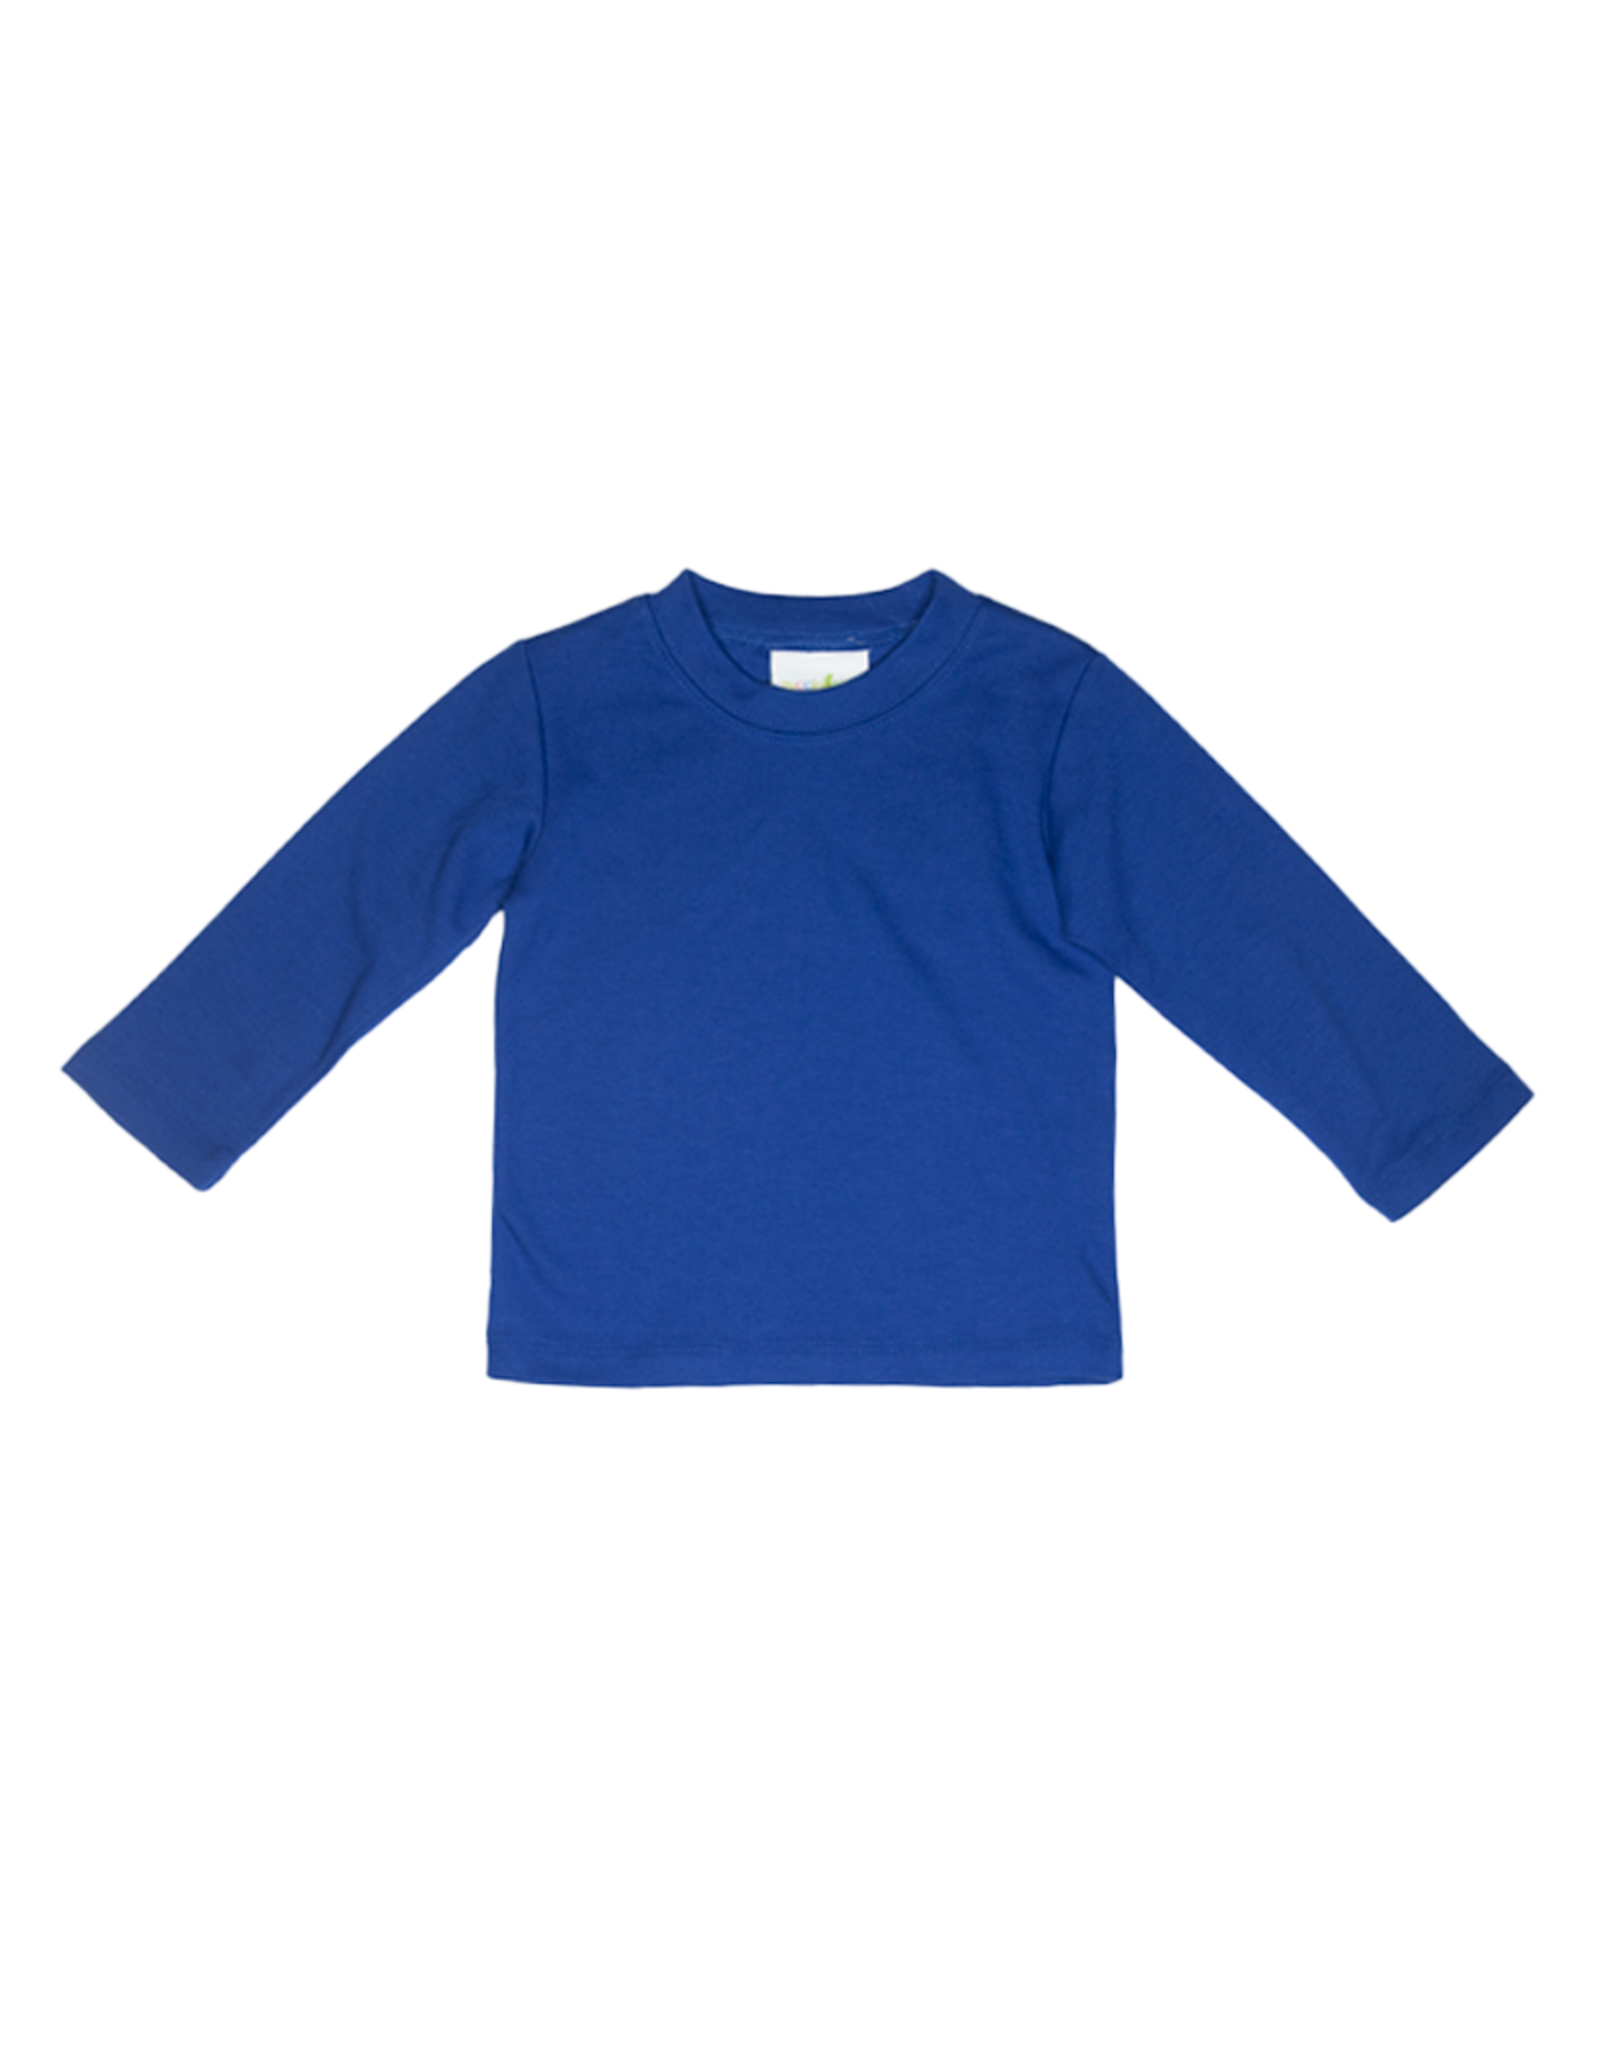 Zuccini ZMF21 Royal Blue Solid Shirt